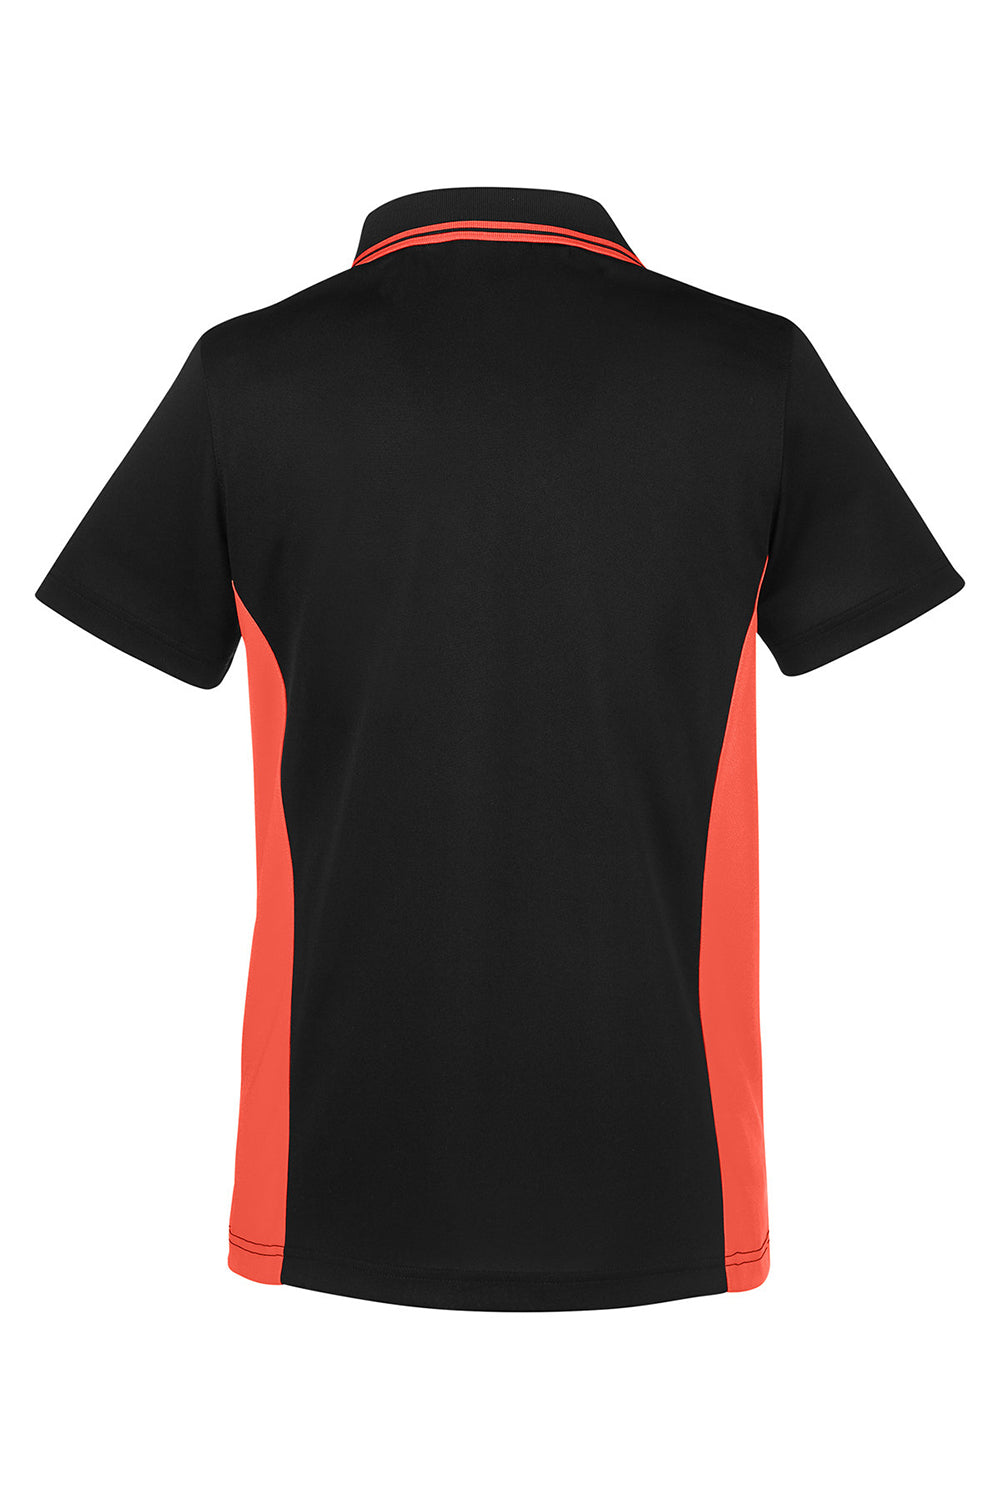 Harriton M386W Womens Flash Performance Moisture Wicking Colorblock Short Sleeve Polo Shirt Black/Team Orange Flat Back